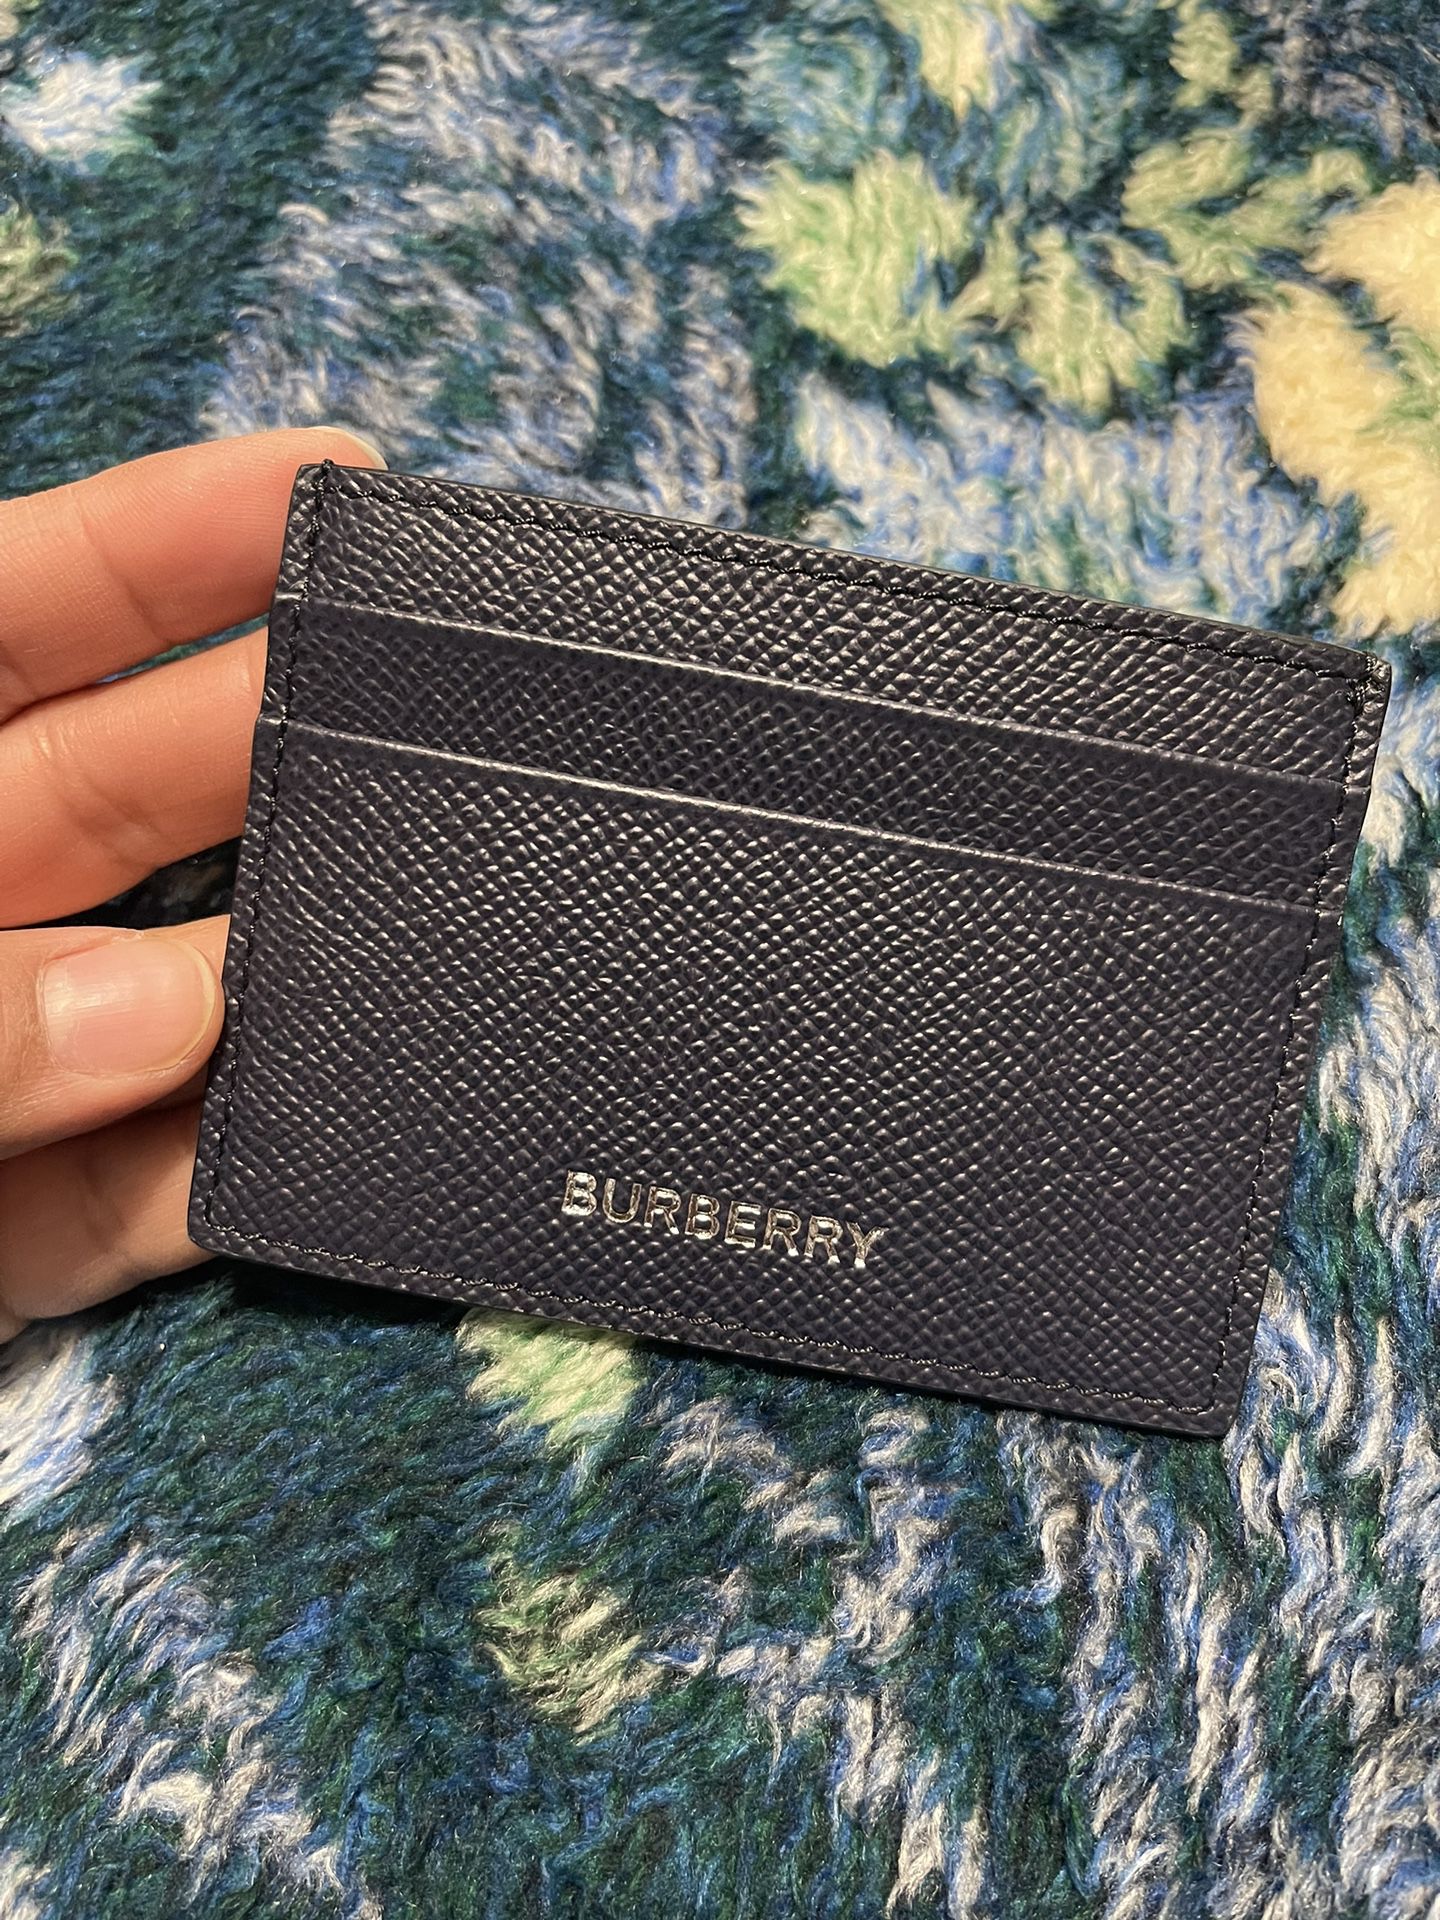 Burberry Card Holder Wallet Navy Blue